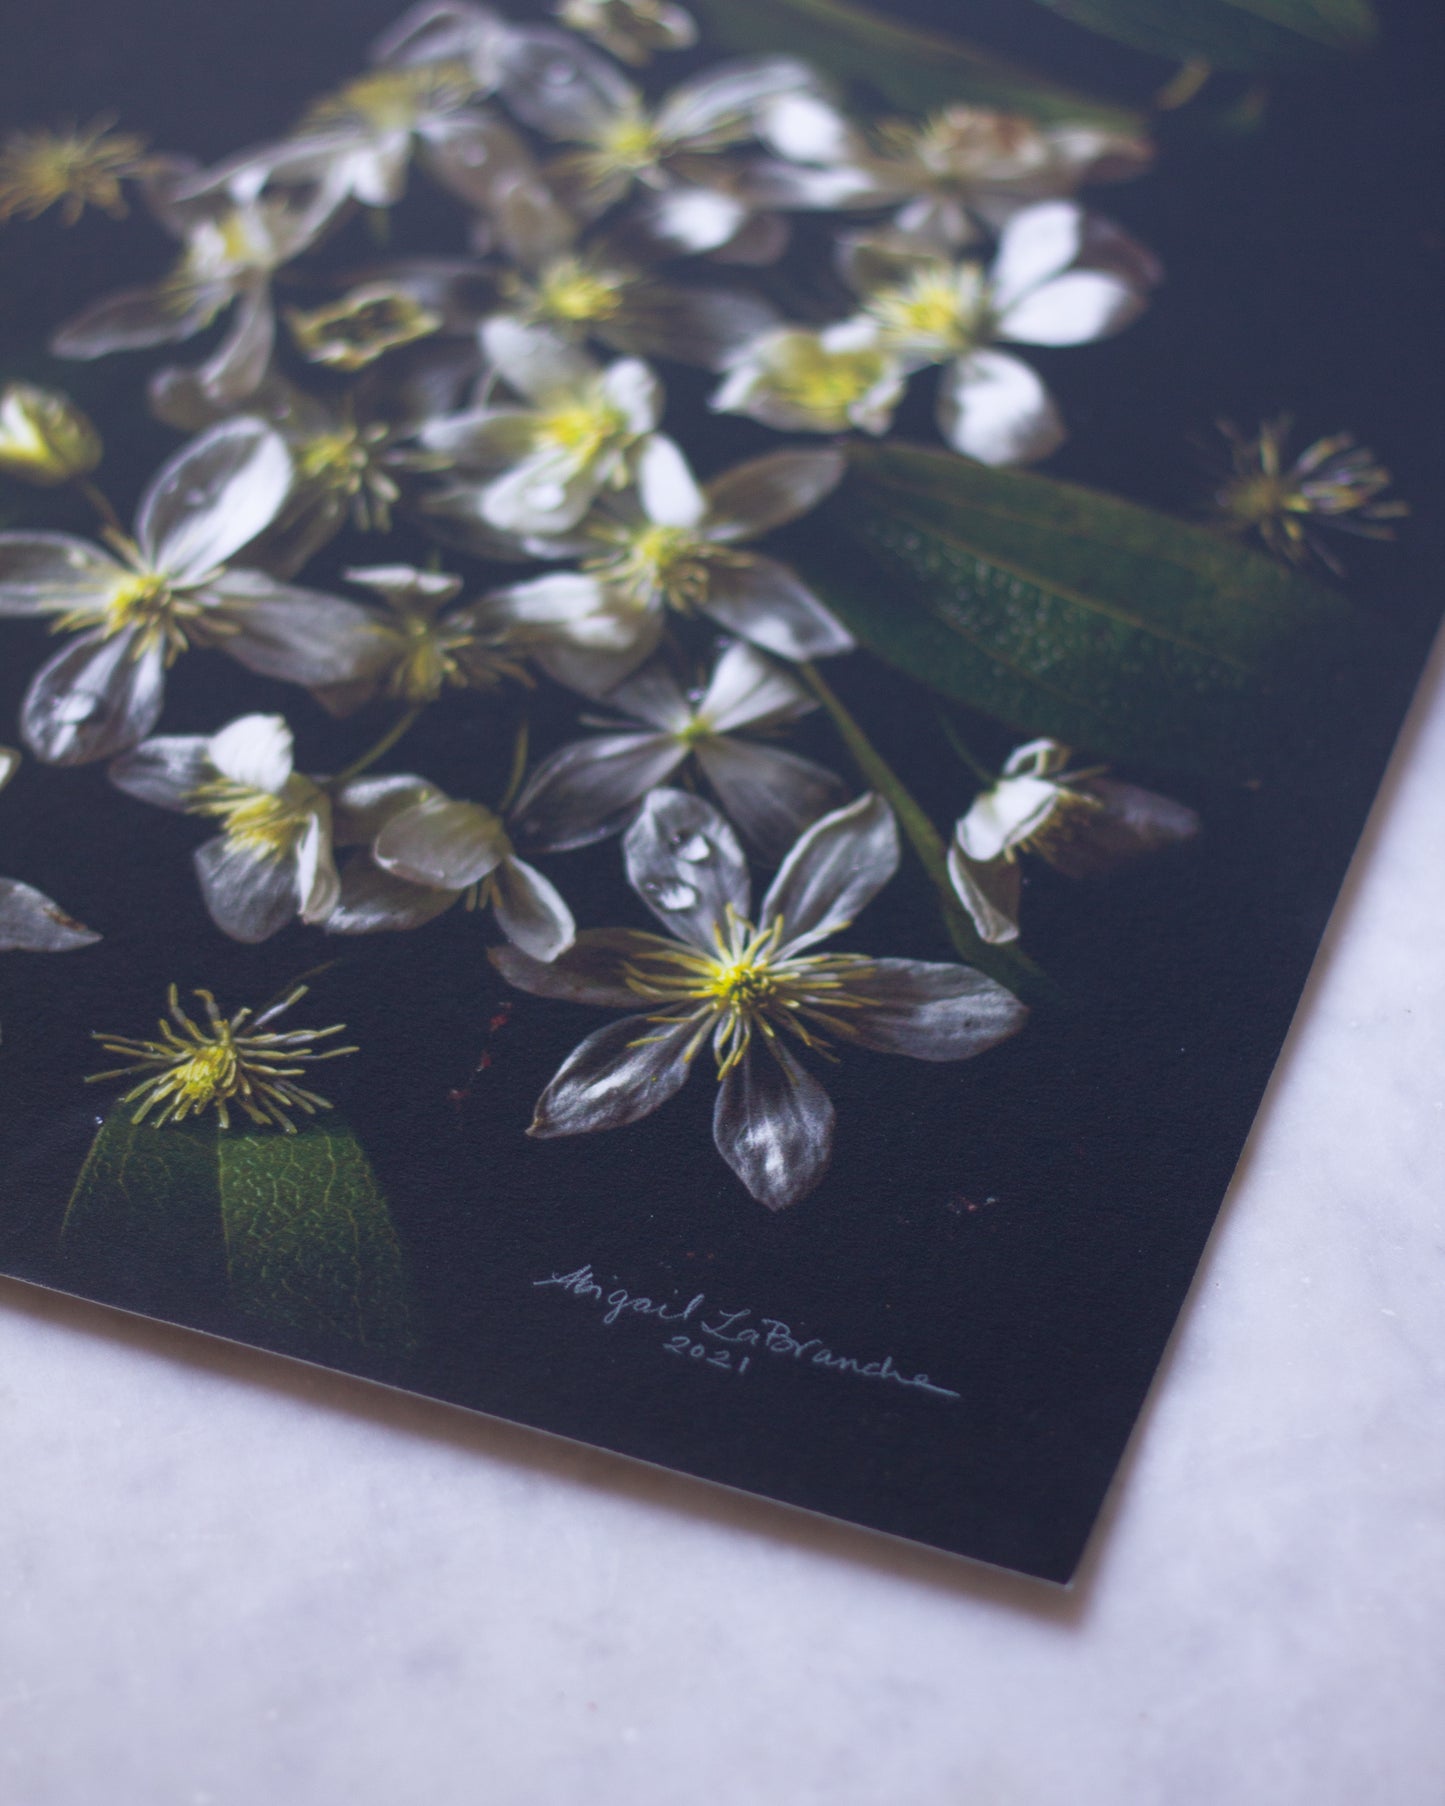 The Asparagus Bundle Limited Edition Print